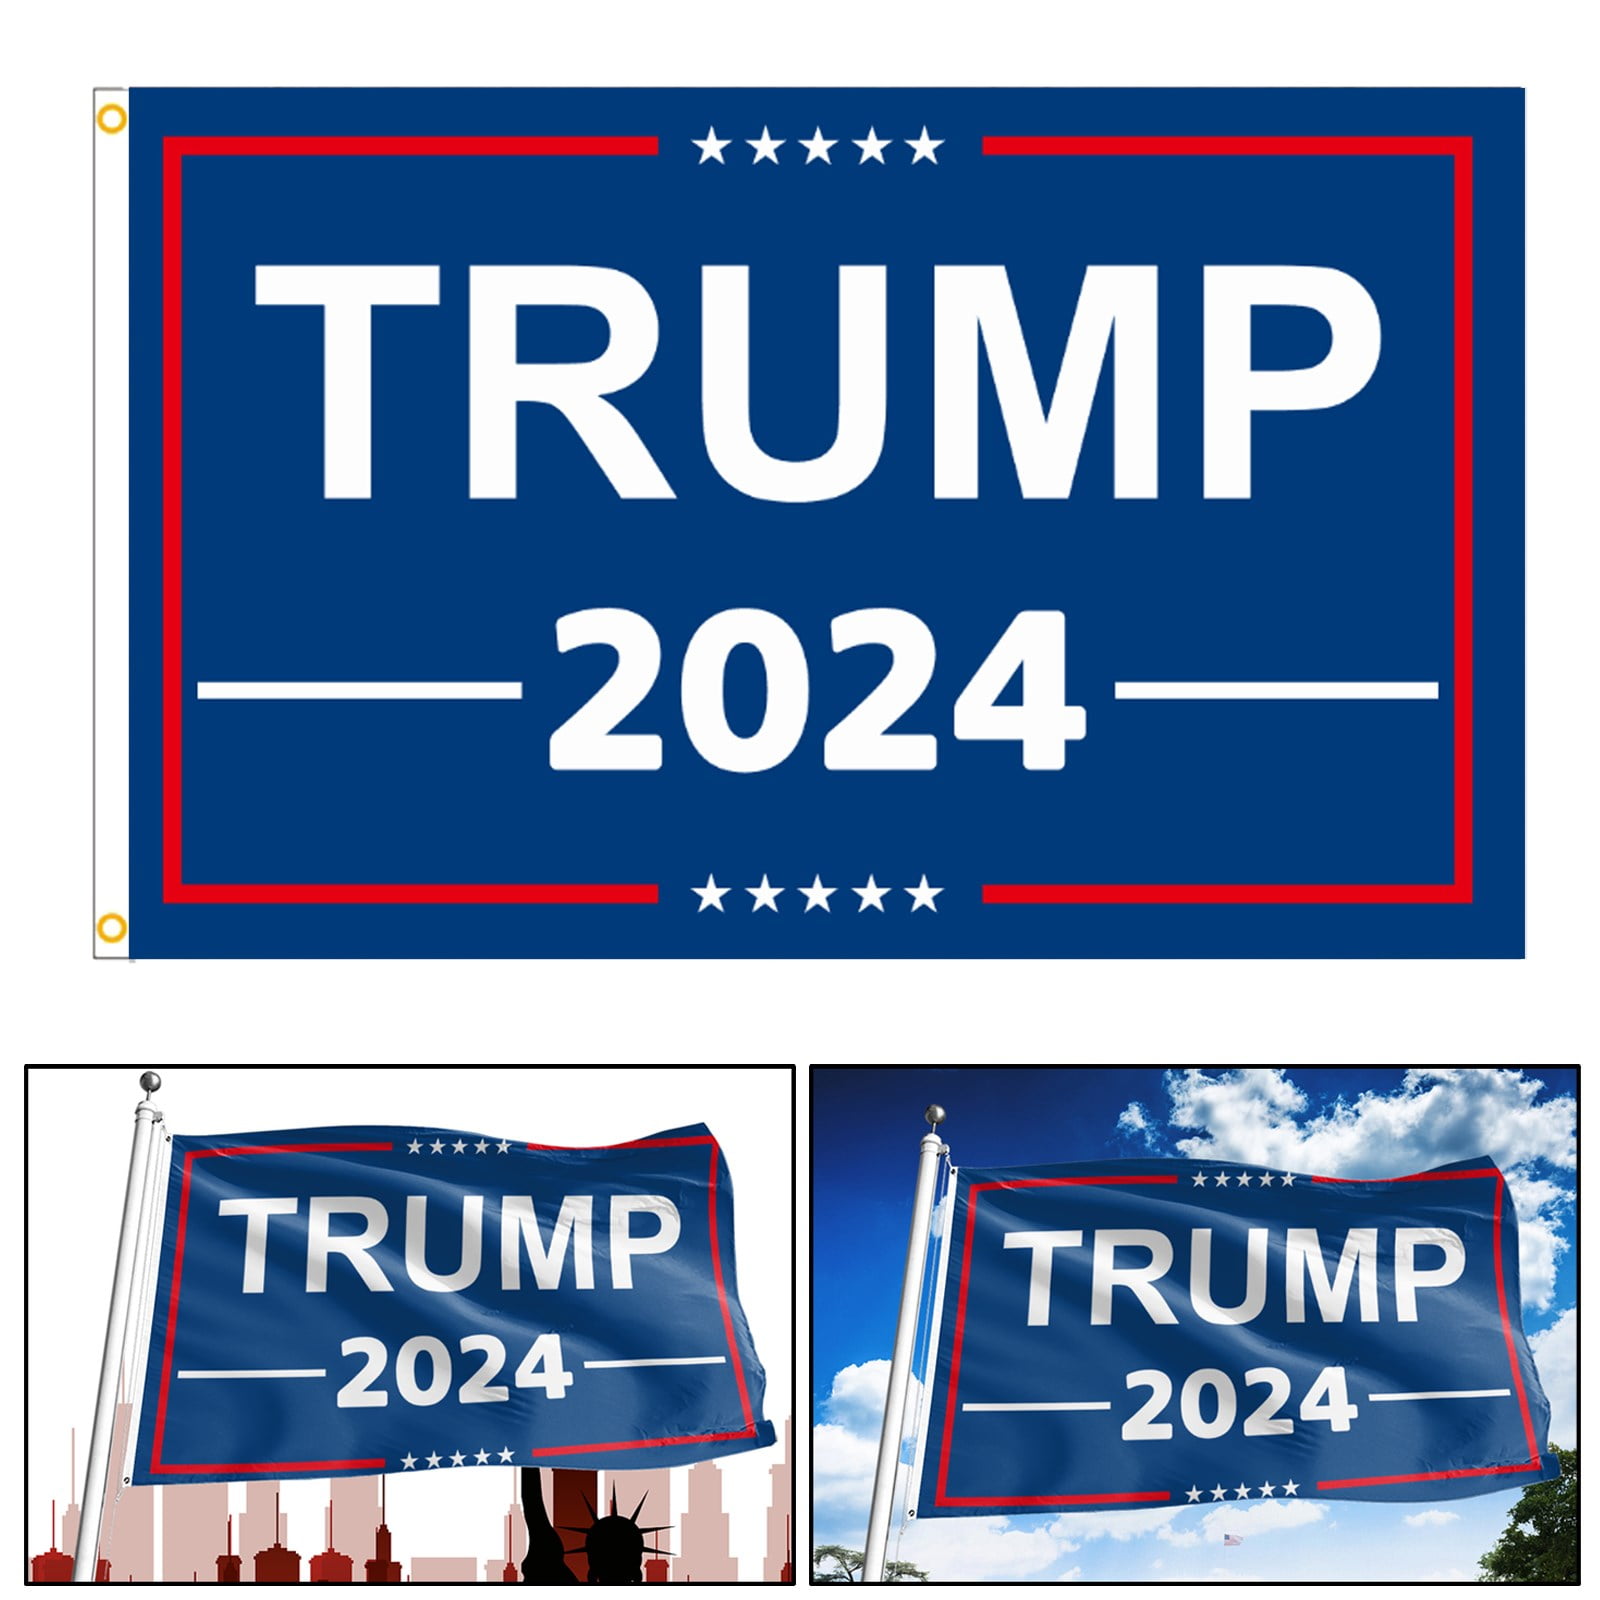 Trump 2020 Flag Keep Make America Great Again President MAGA KAG USA New Style 